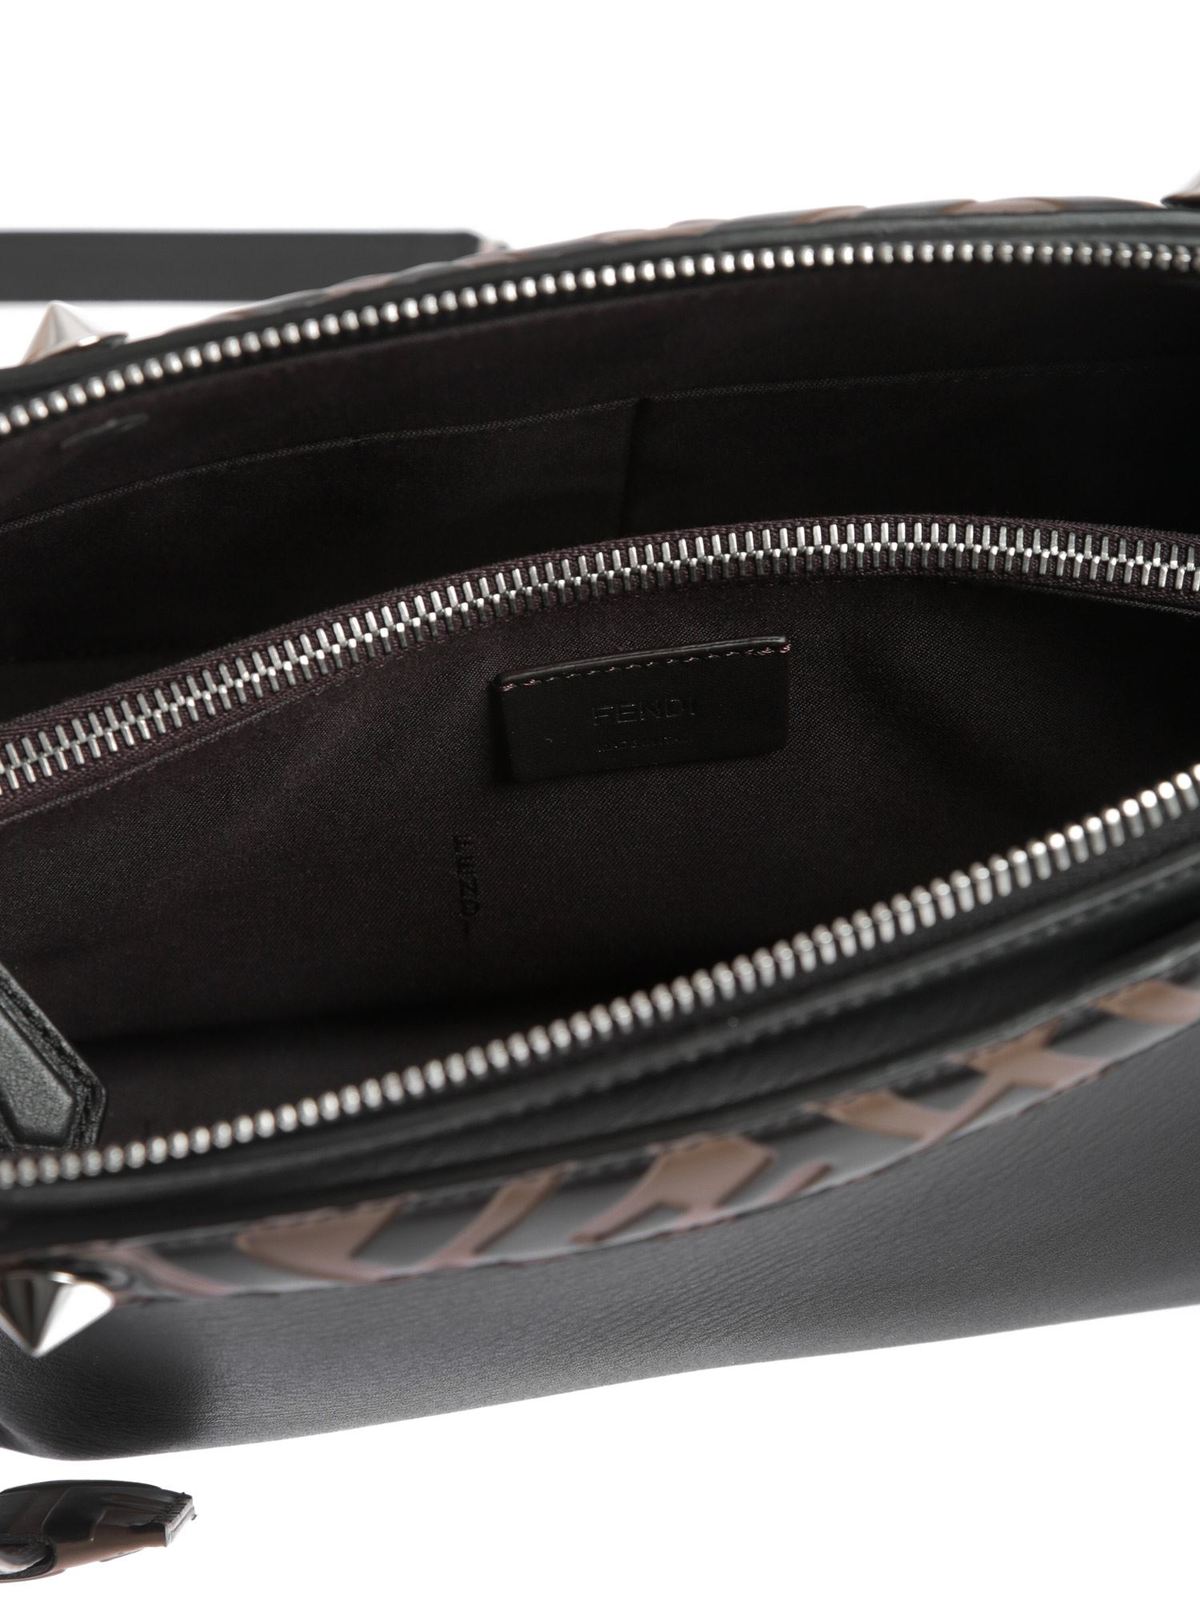 FENDI: Medium clutch bag in leather with logo - White